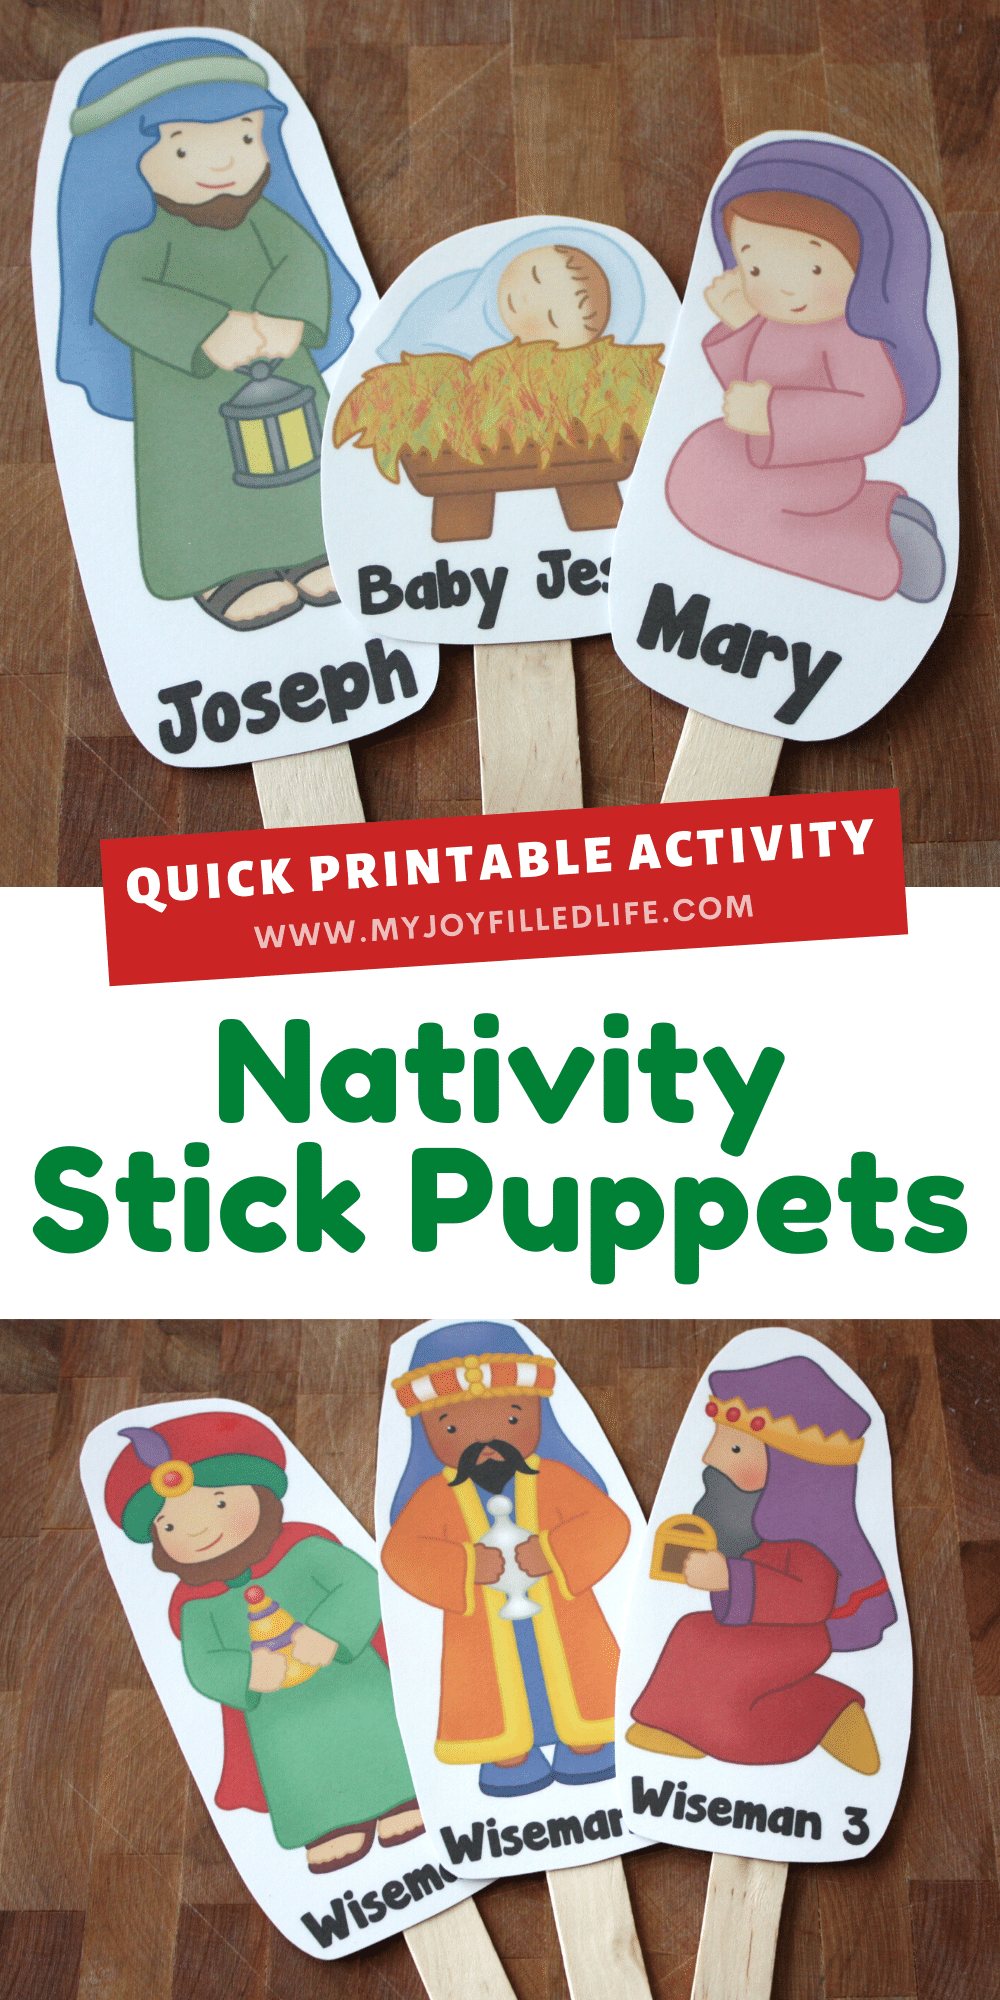 printable-nativity-stick-puppets-my-joy-filled-life